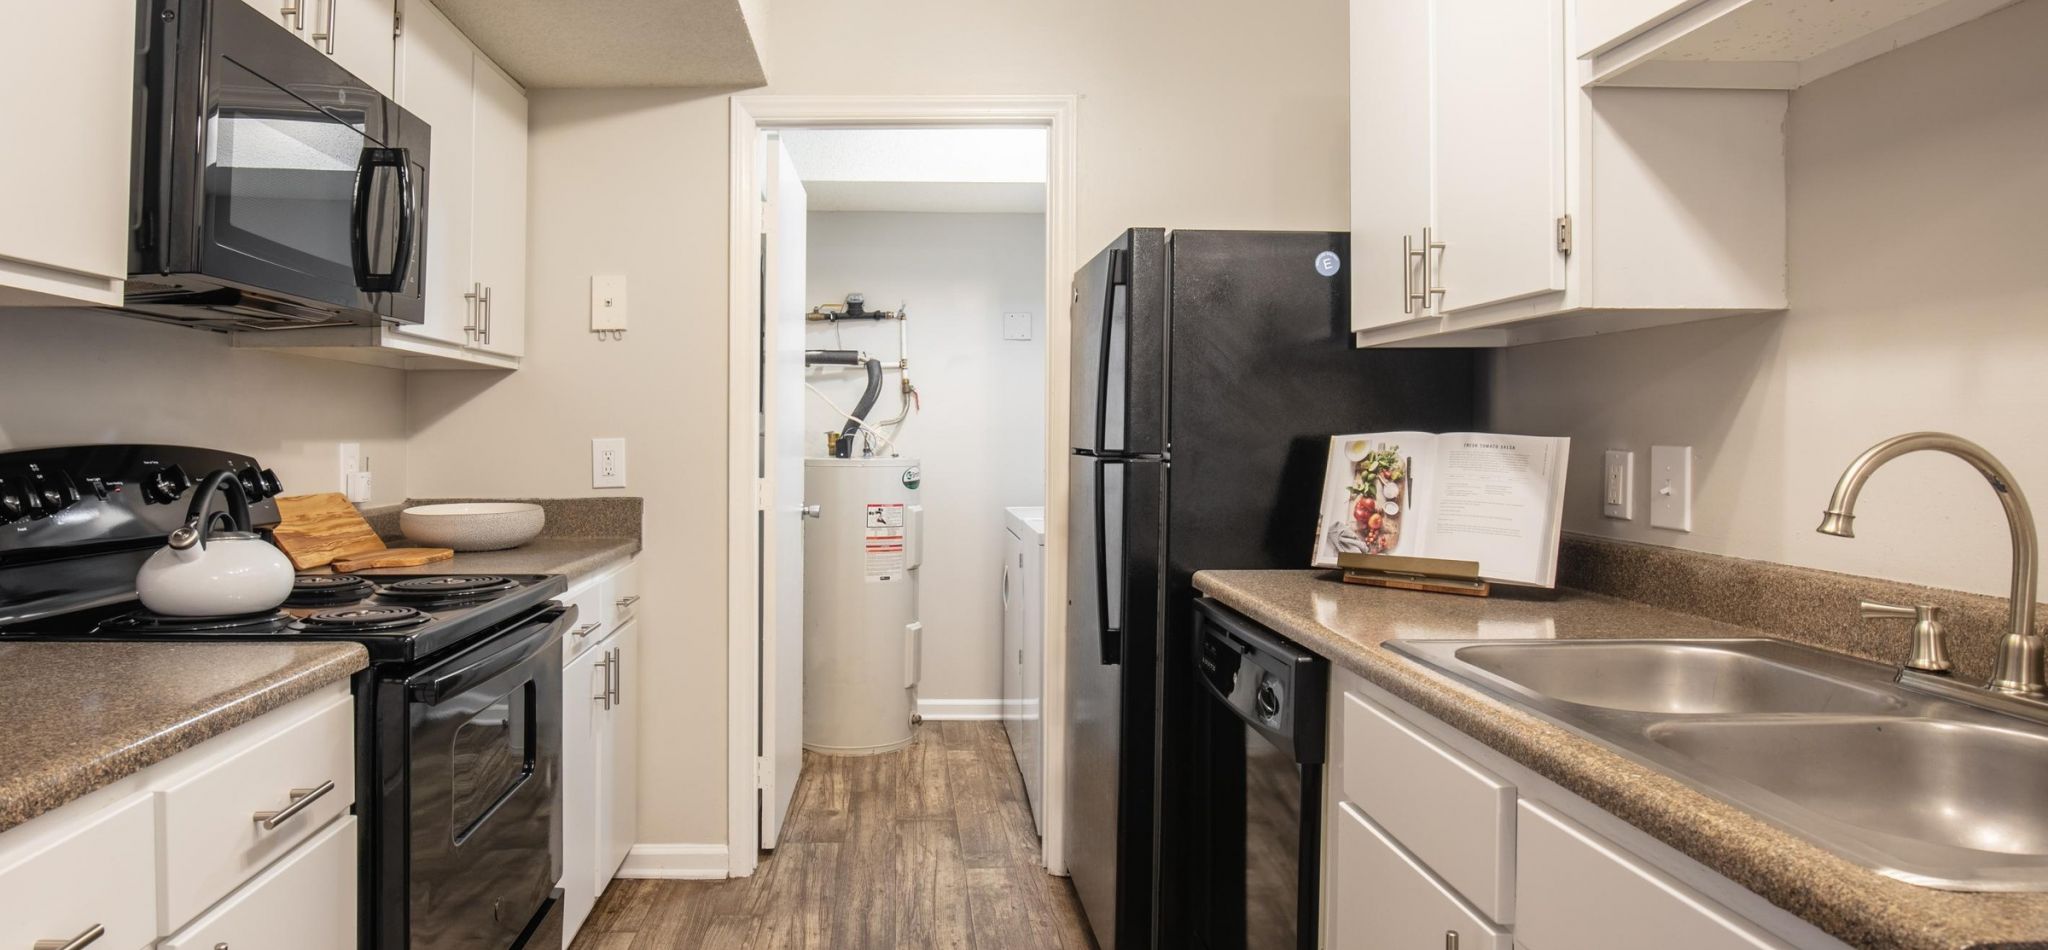 Hawthorne Commons apartment kitchen interior with wood vinyl flooring, sleek black energy efficient appliances, and designer cabinetry